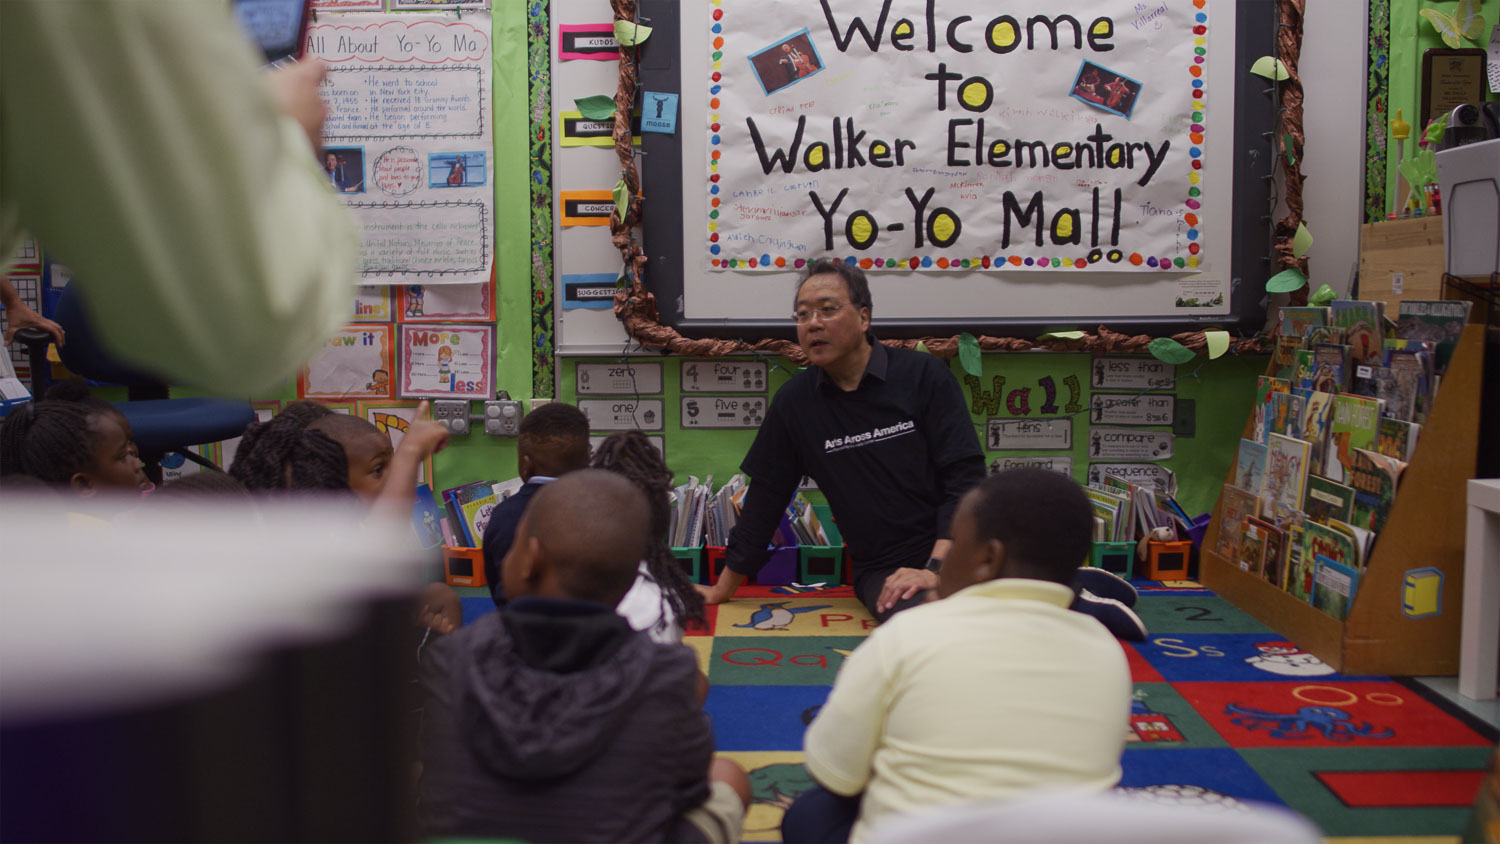 The Kennedy Center Man addresses a class of children in a classroom